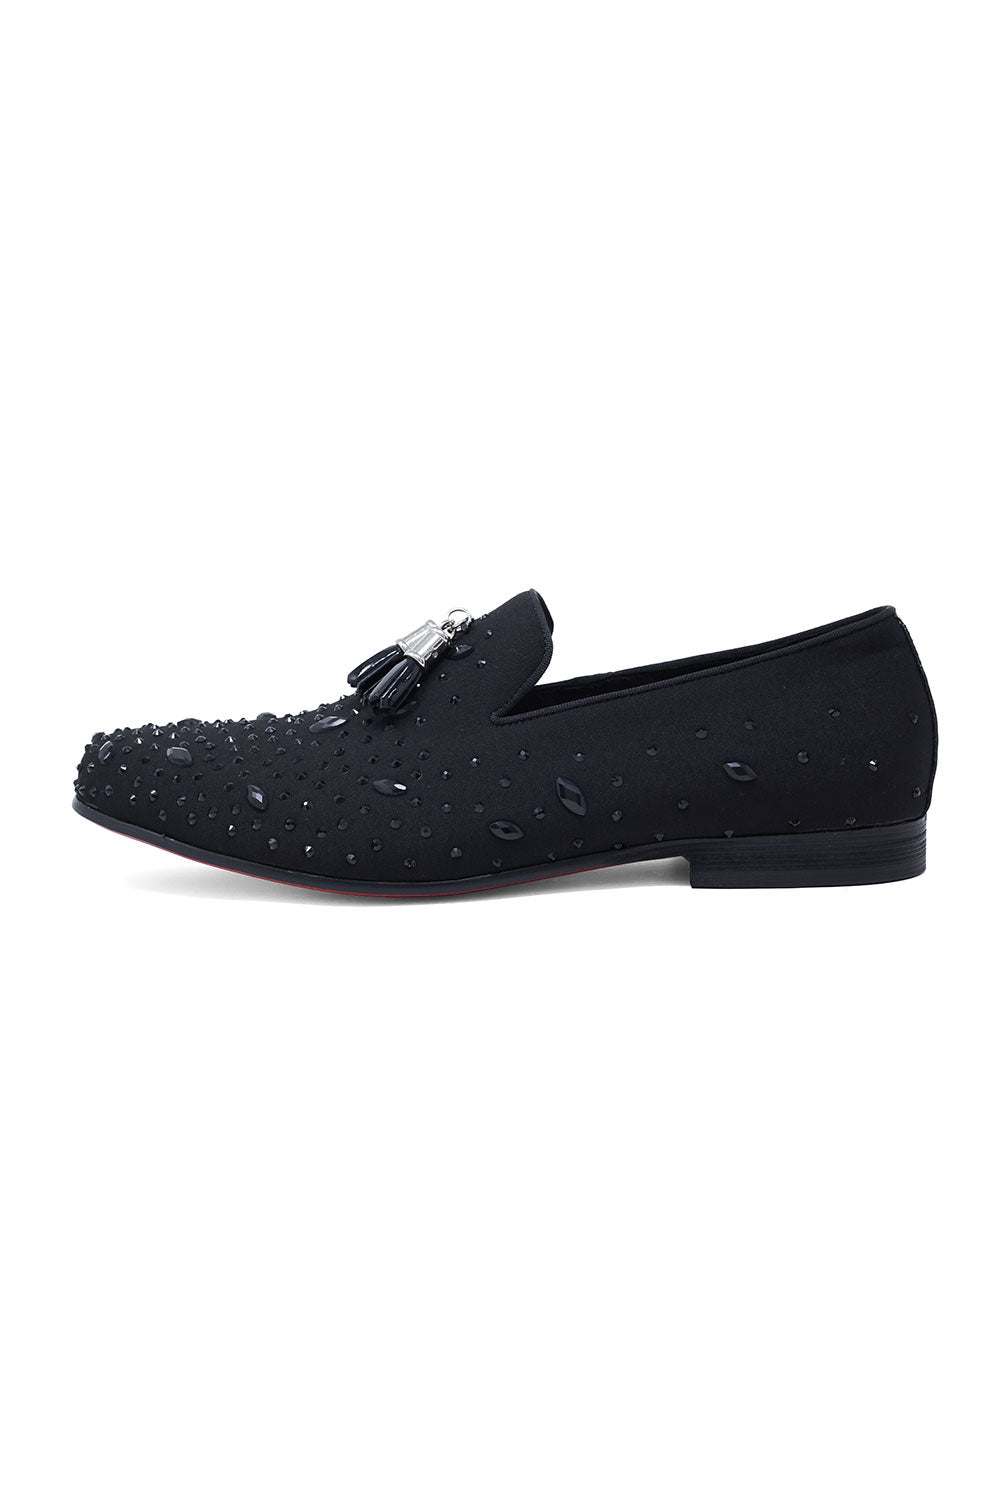 BARABAS Men's Rhinestone Dimond Tassel Loafer Dress Shoes SH3080SH3080 Black